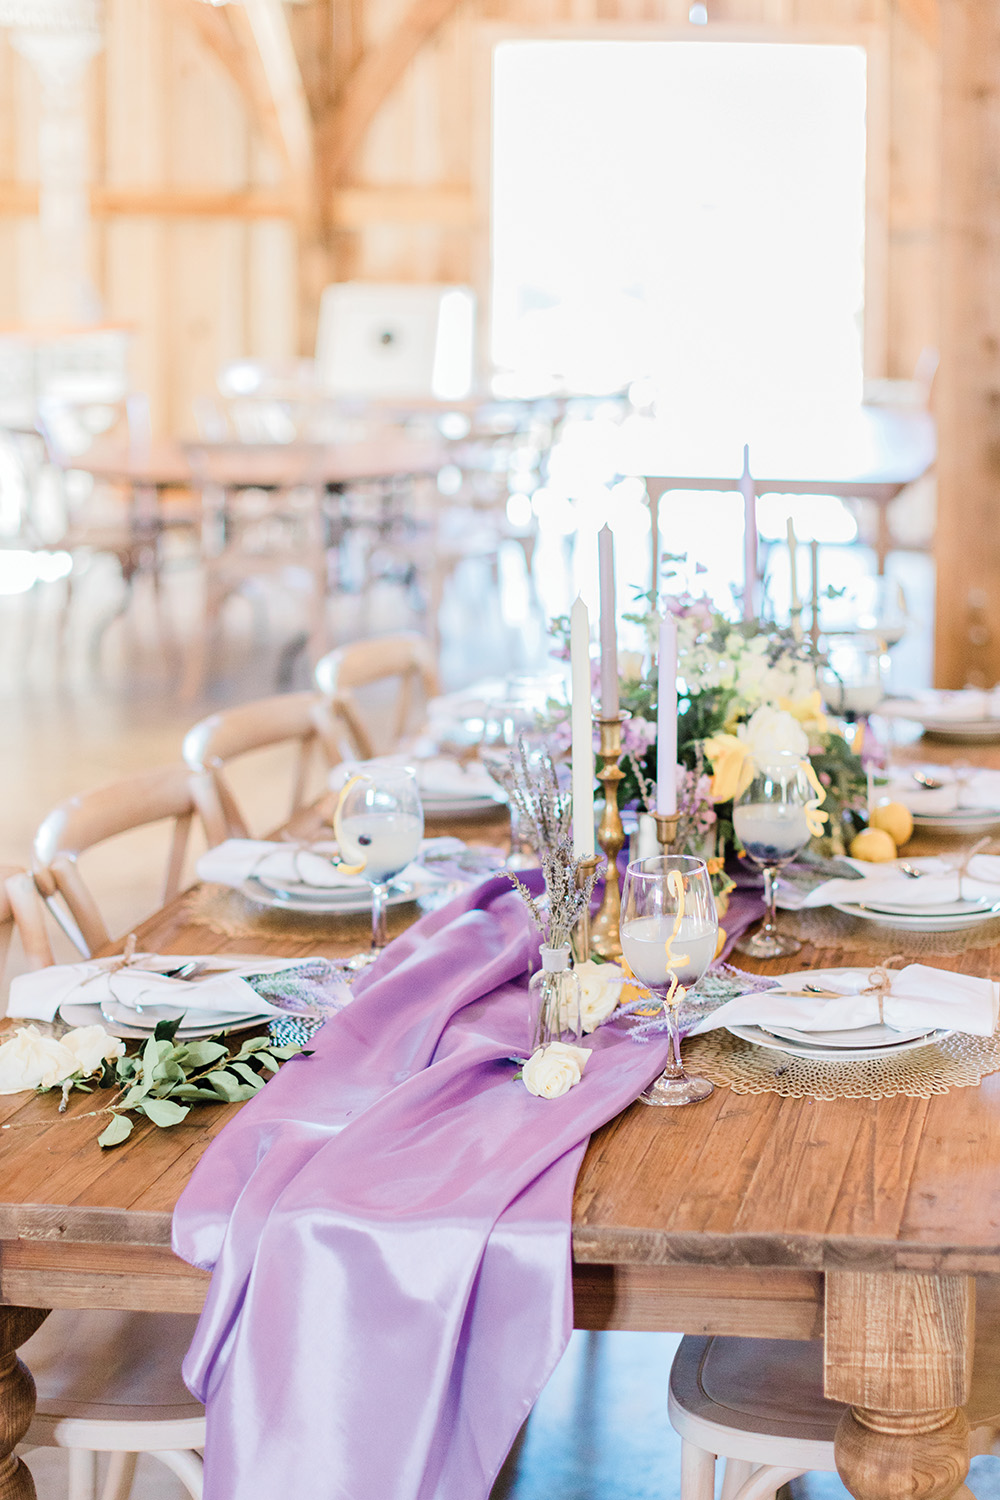 lemon and lavender wedding theme table centerpieces